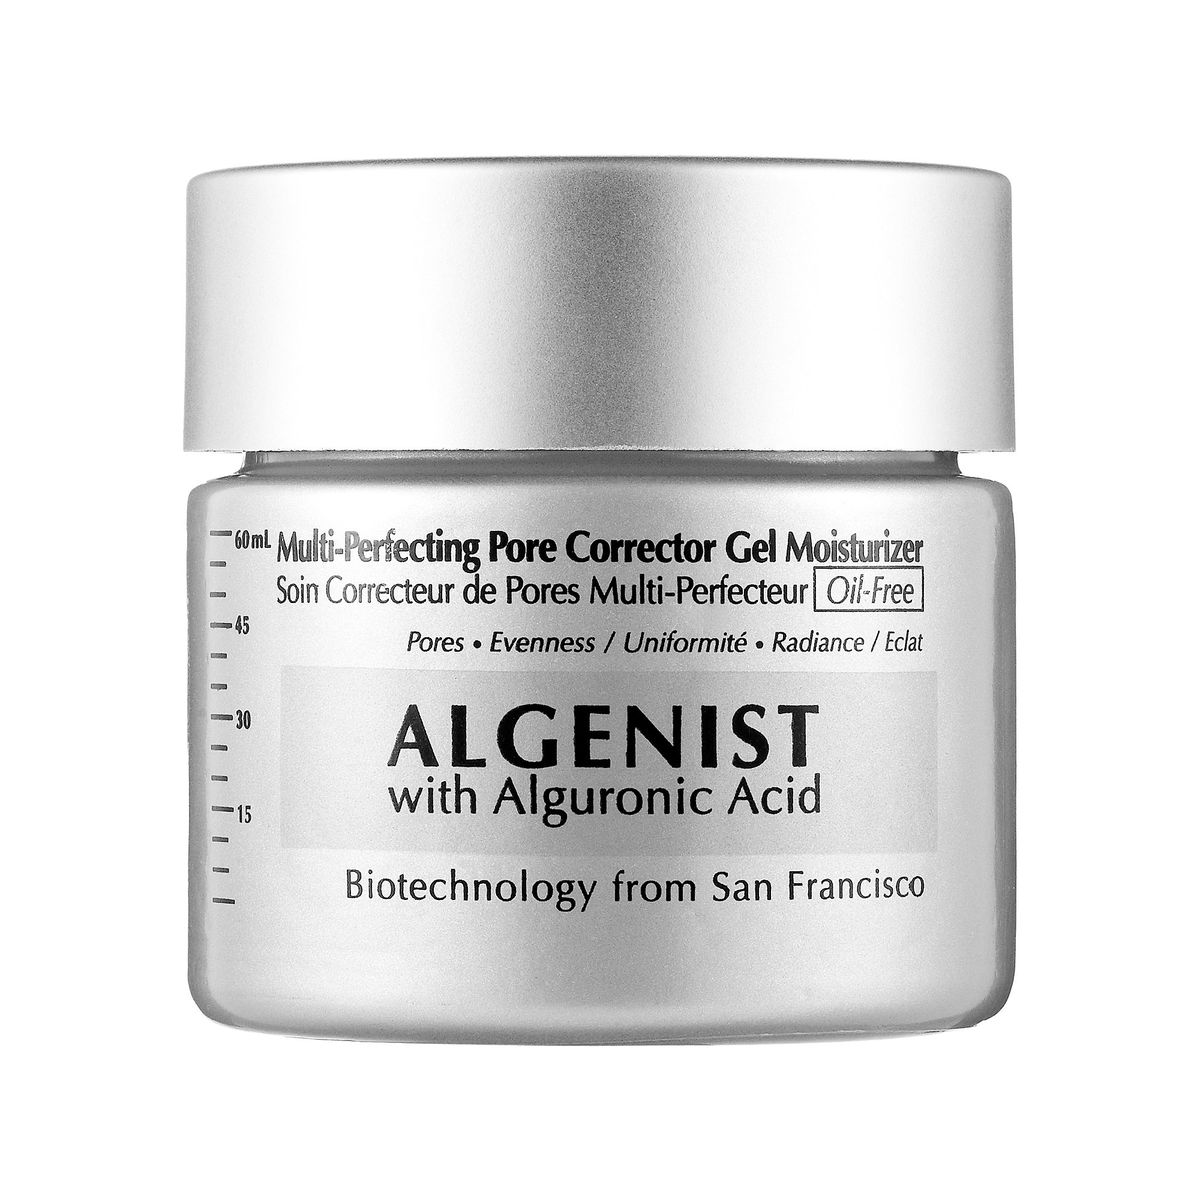 Algenist Multi-Perfecting Pore Corrector Gel Moisturizer